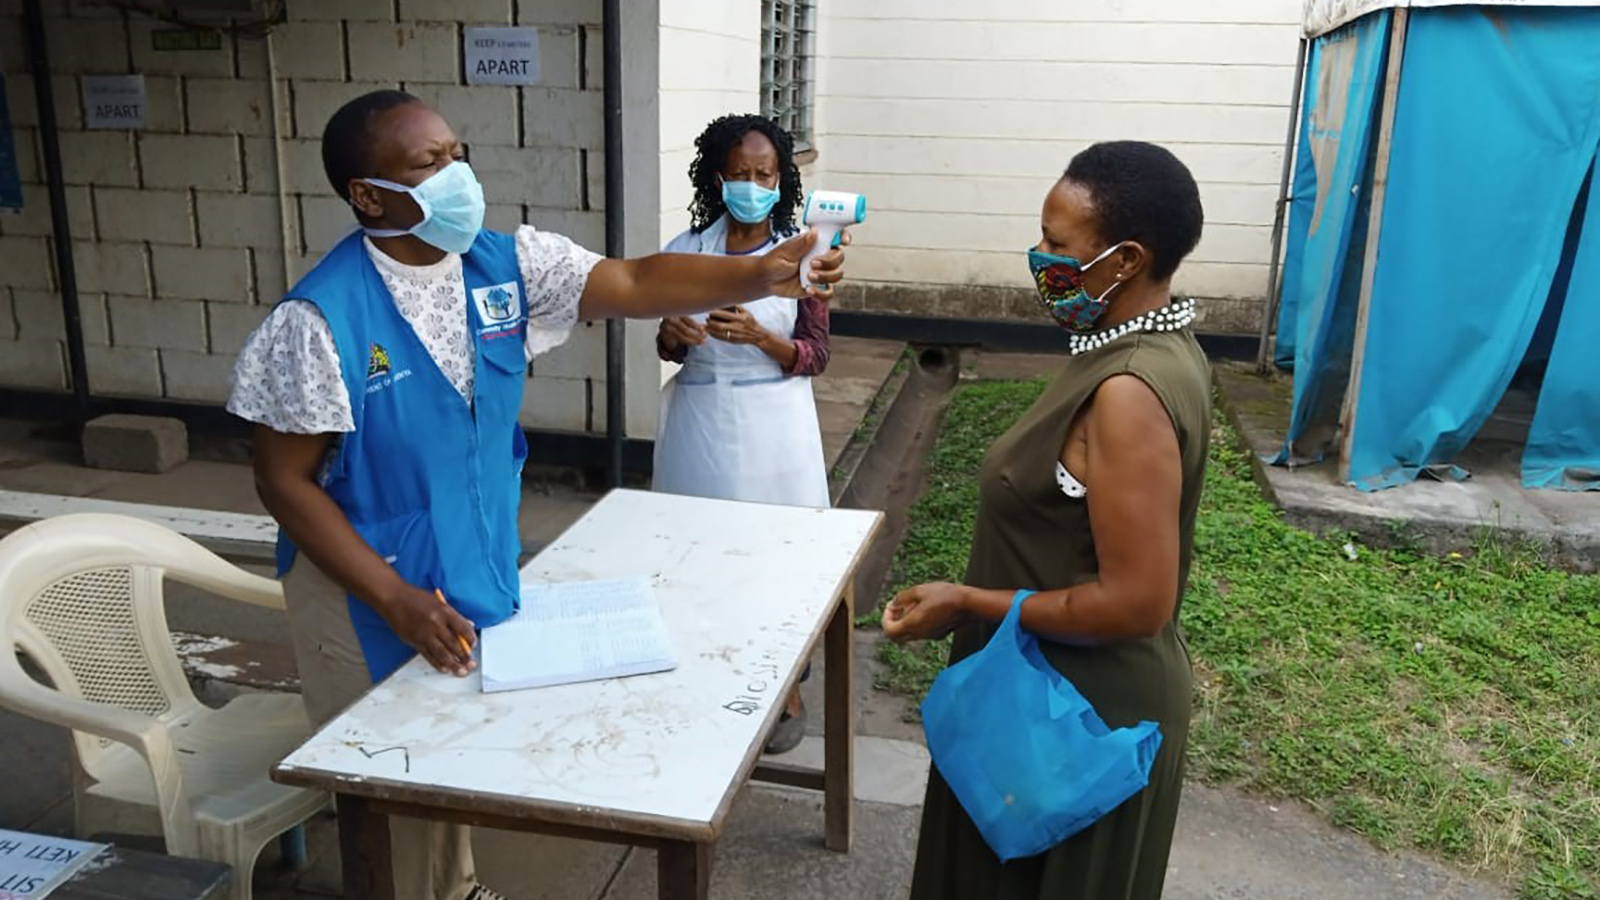 Community health volunteer taking temperatures at health facility in Nairobi.